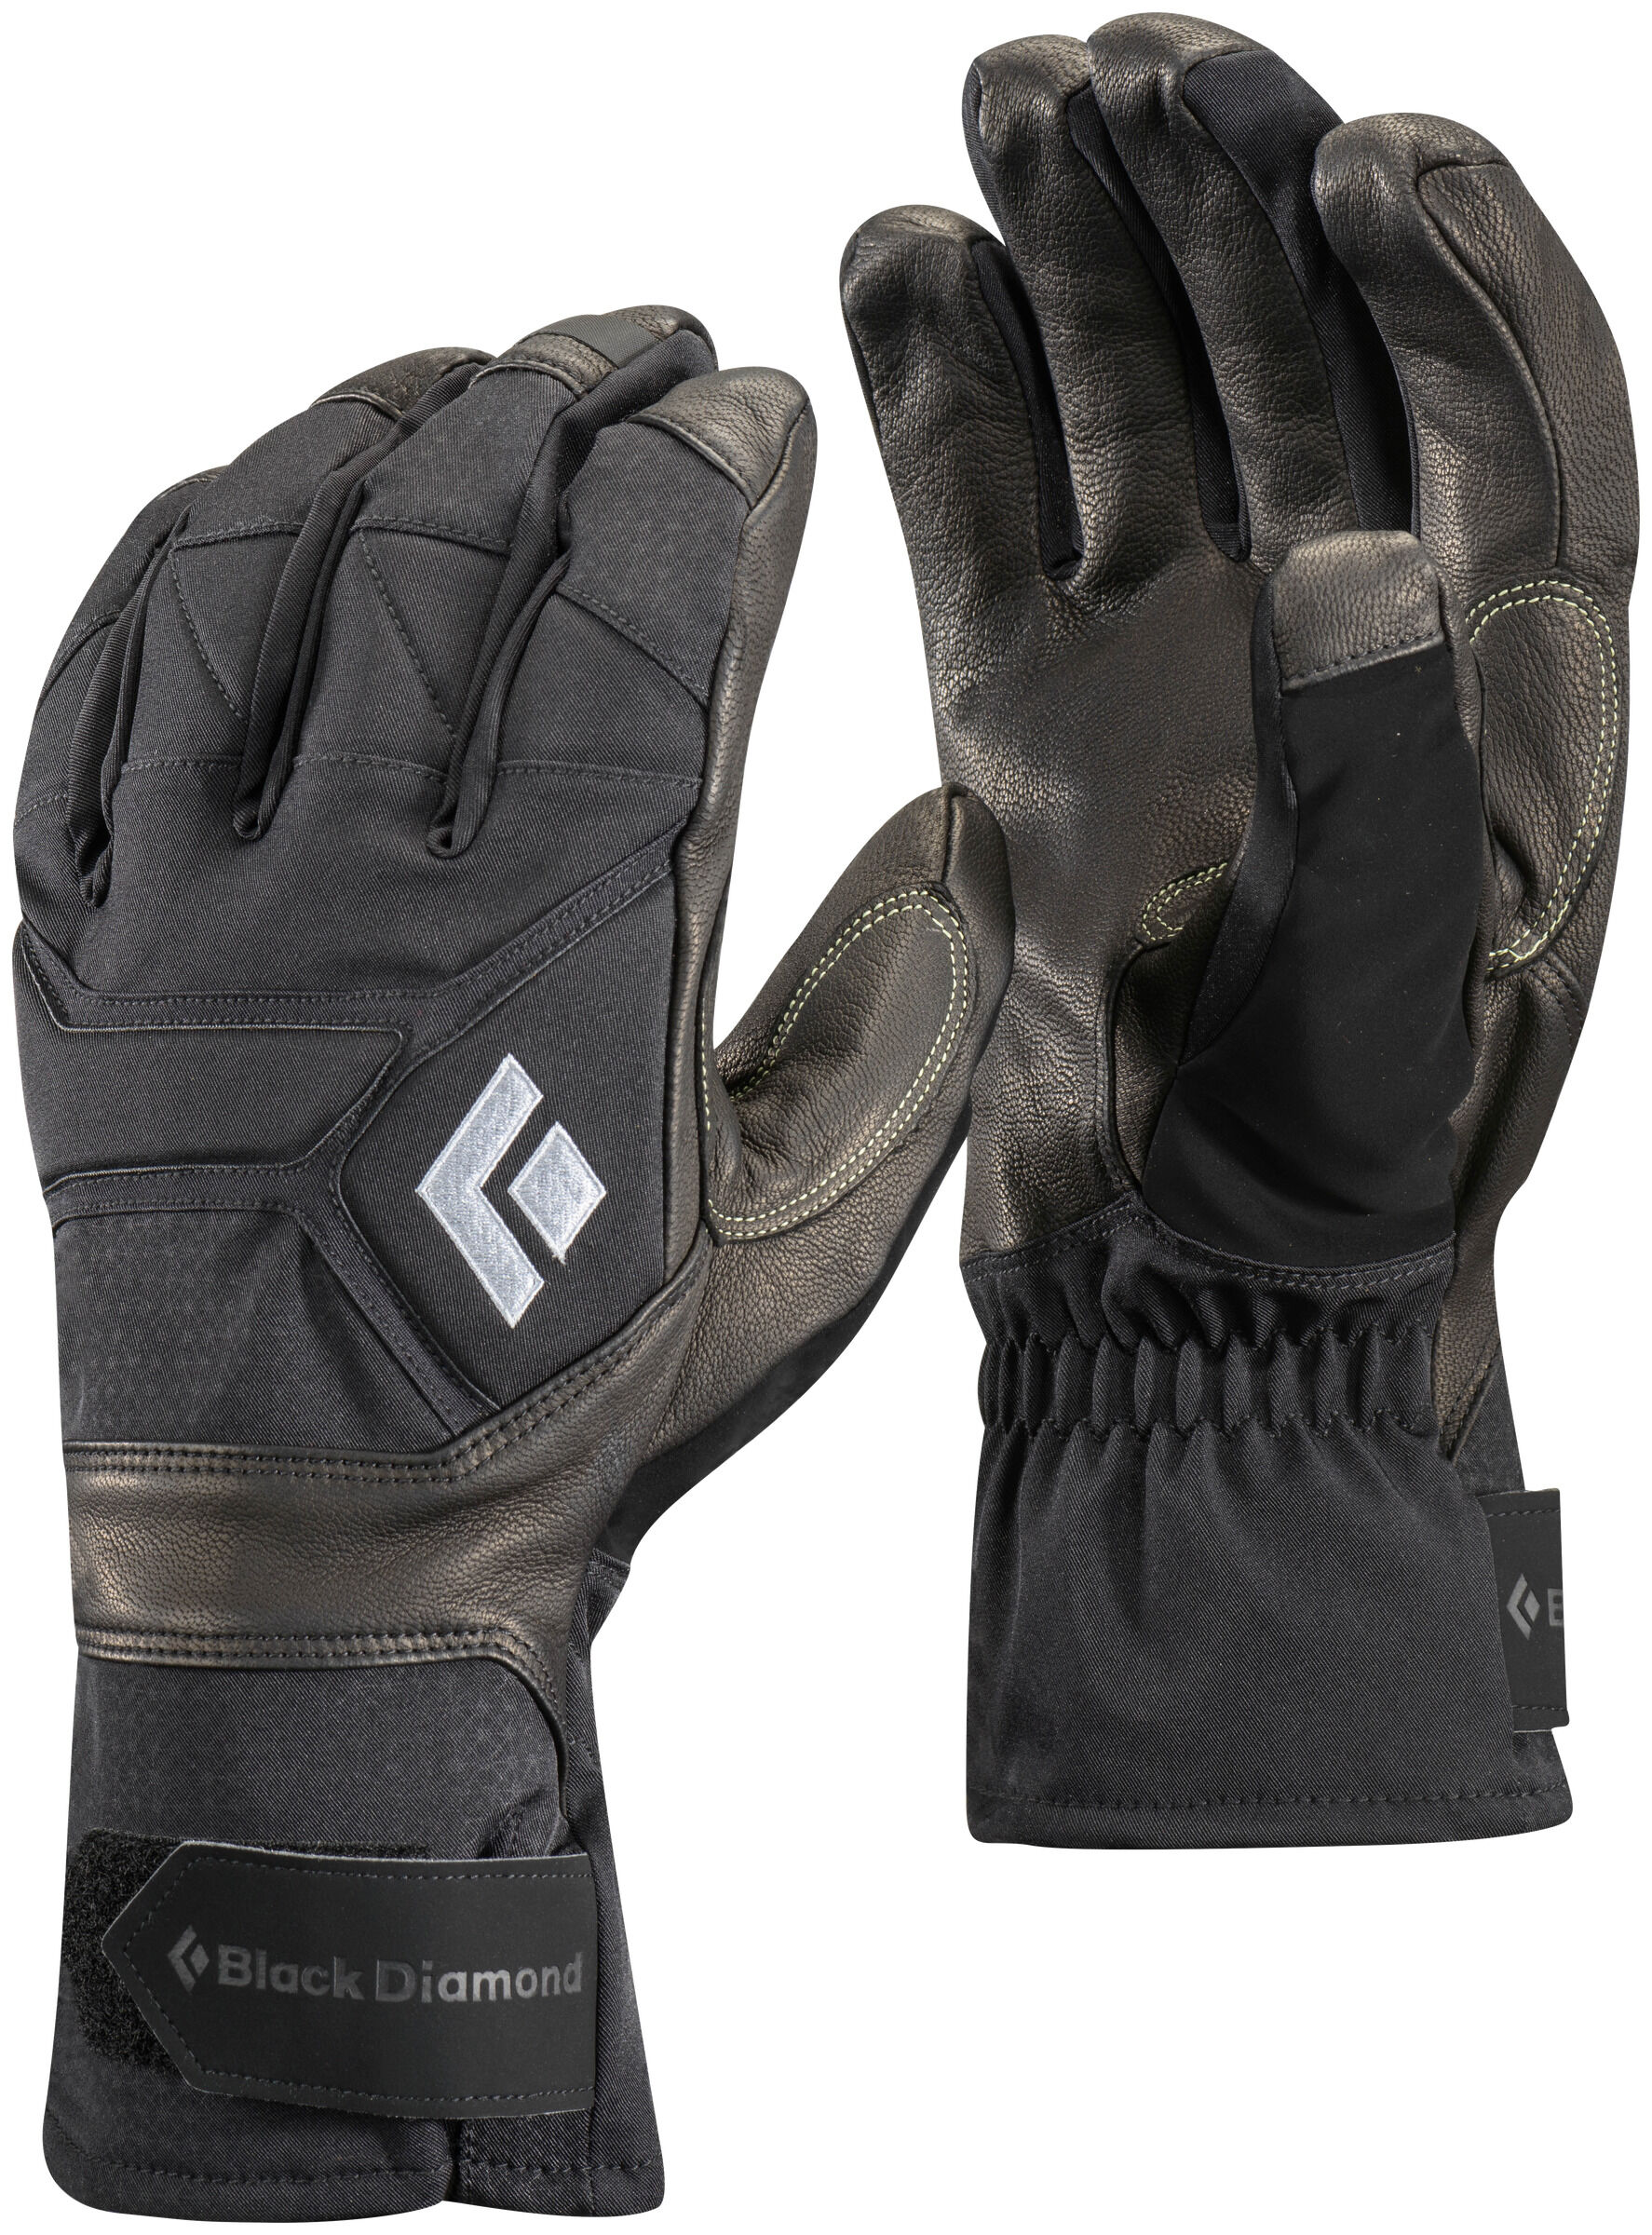 Black Diamond - Punisher - Climbing gloves